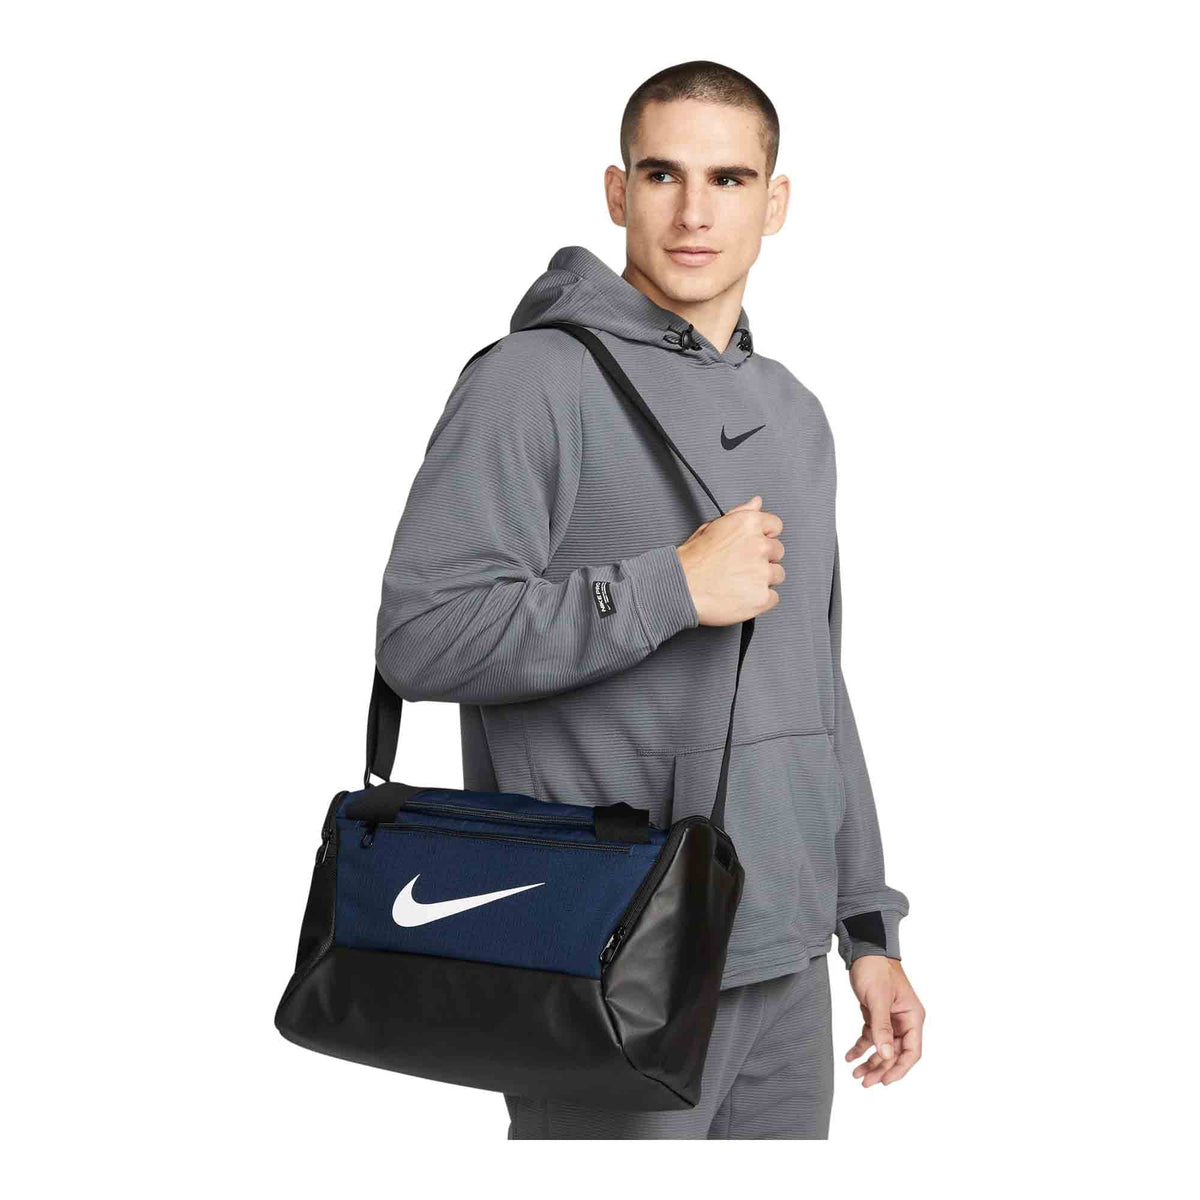 Brasilia 9.5 Duffel Bag - Medium by Nike Online, THE ICONIC